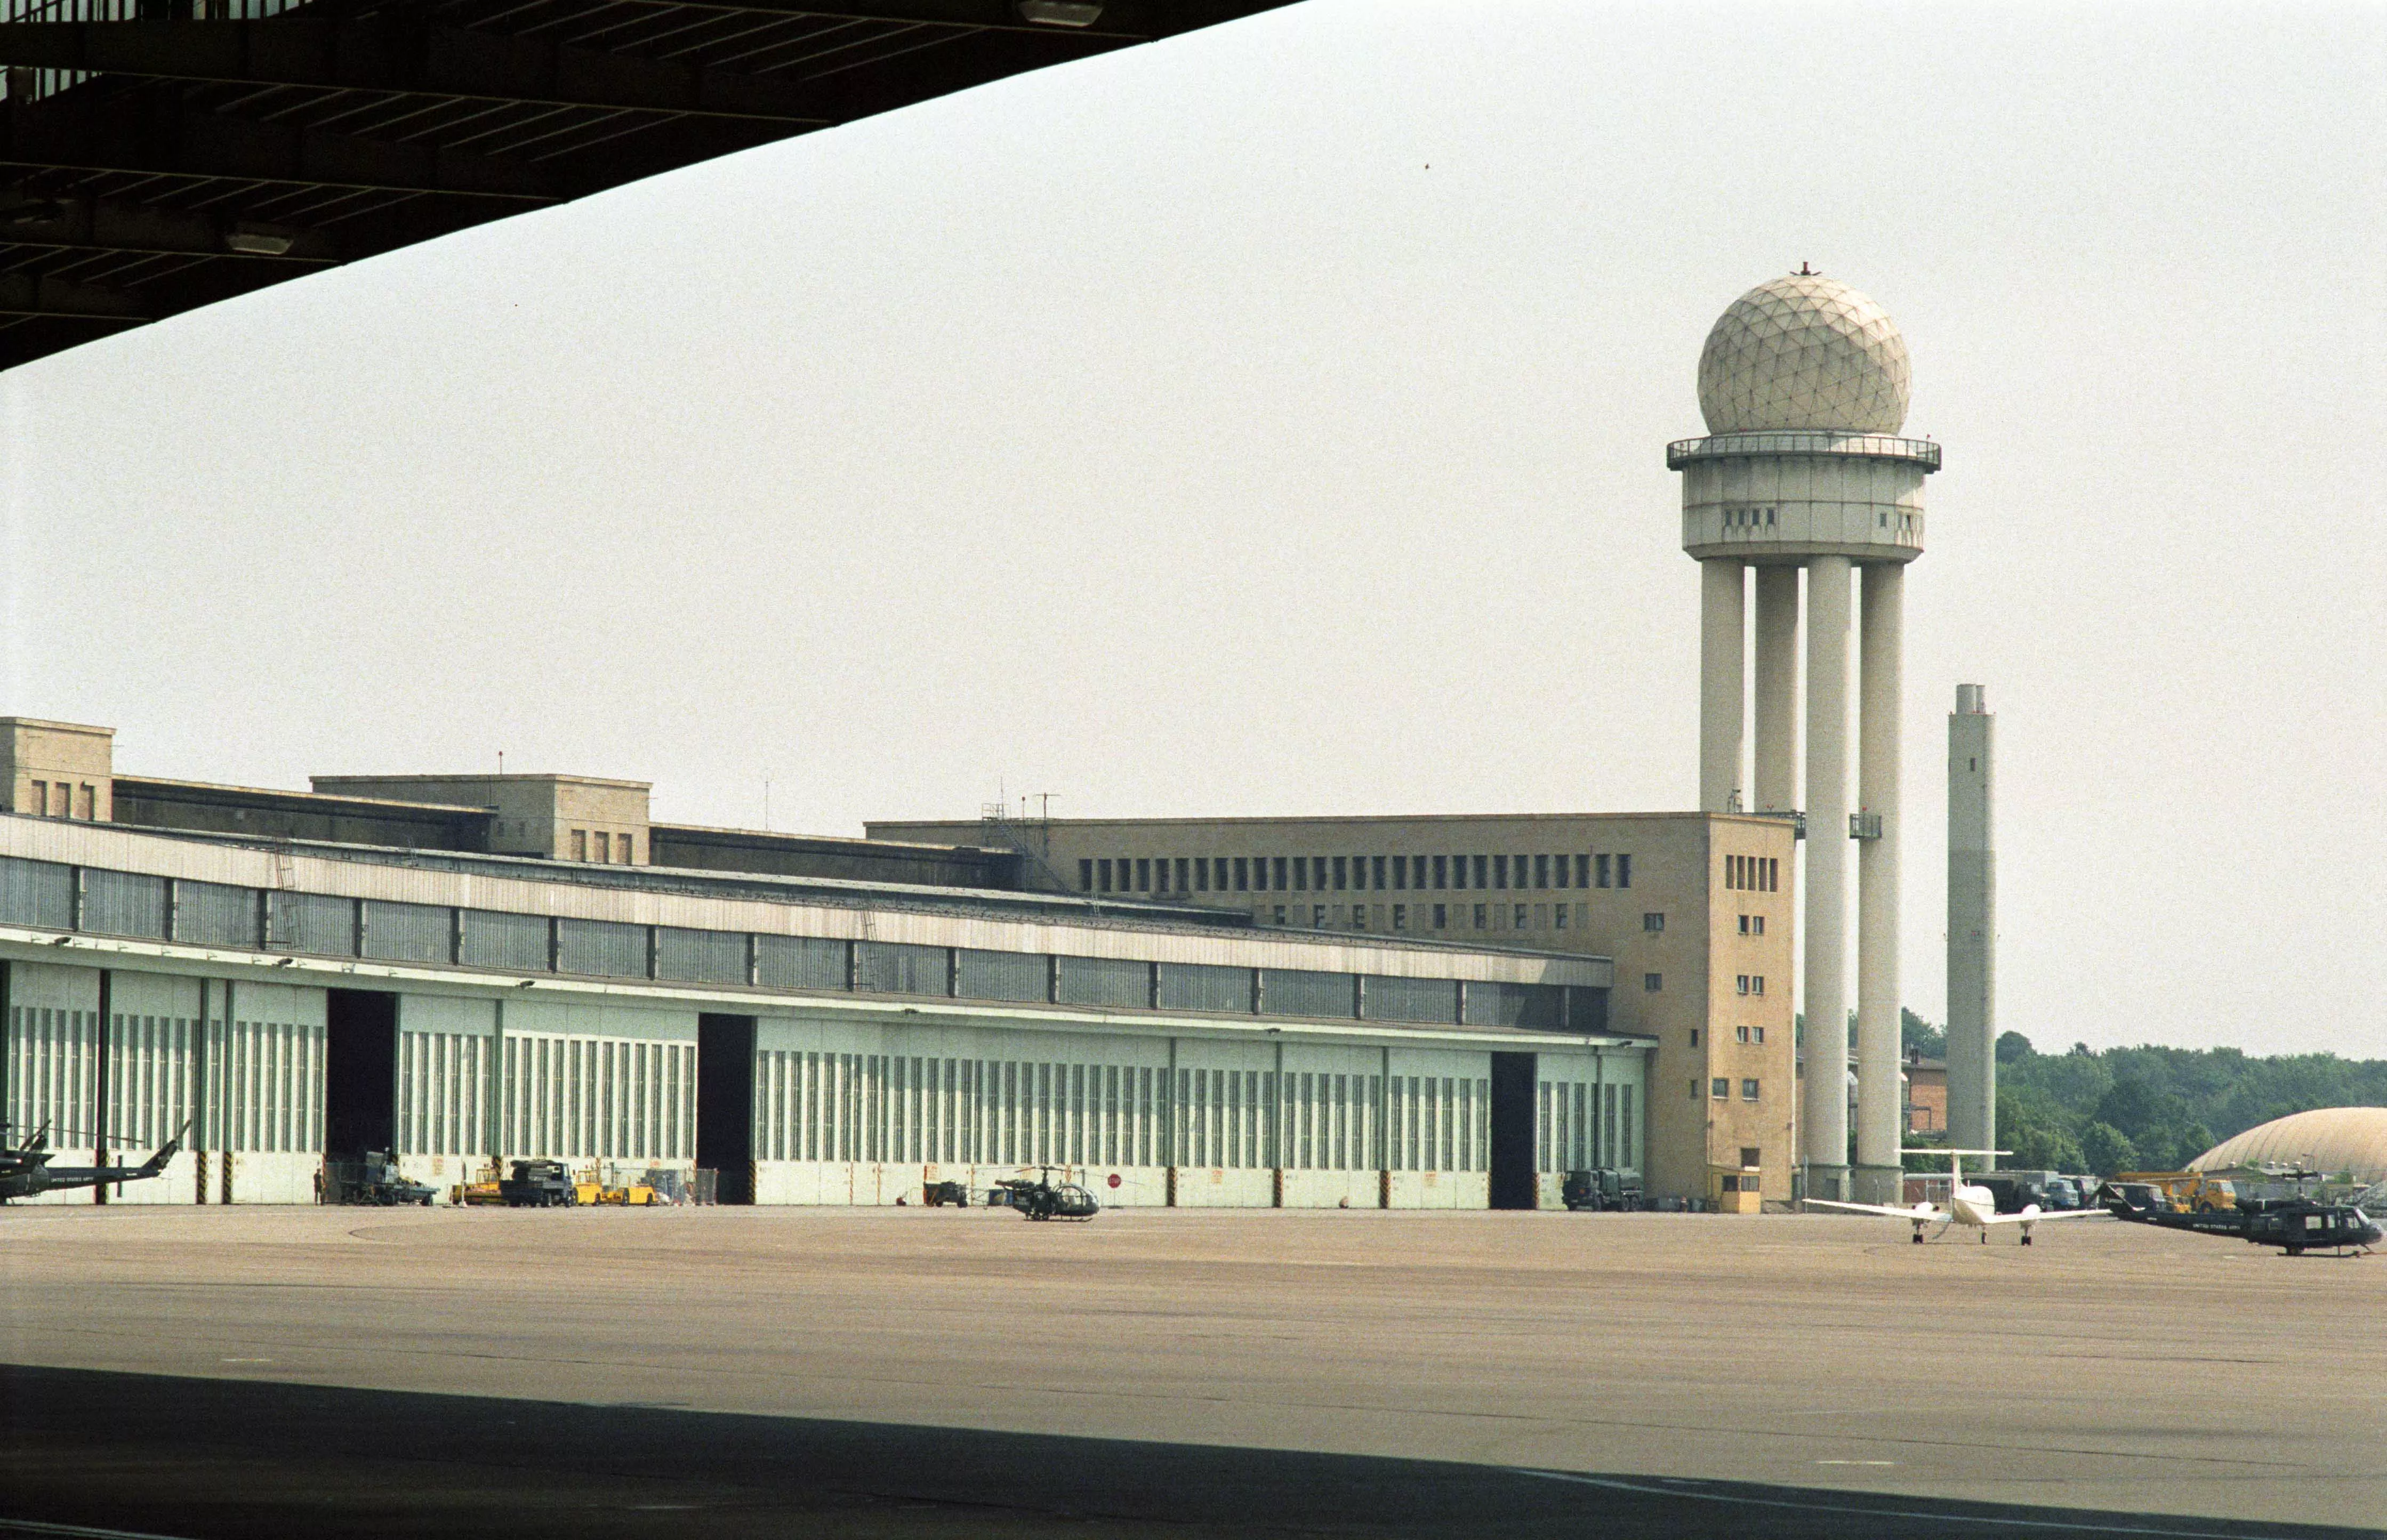 Berlin Tempelhof Airport in Germany, Europe | Urban Exploration - Rated 5.6